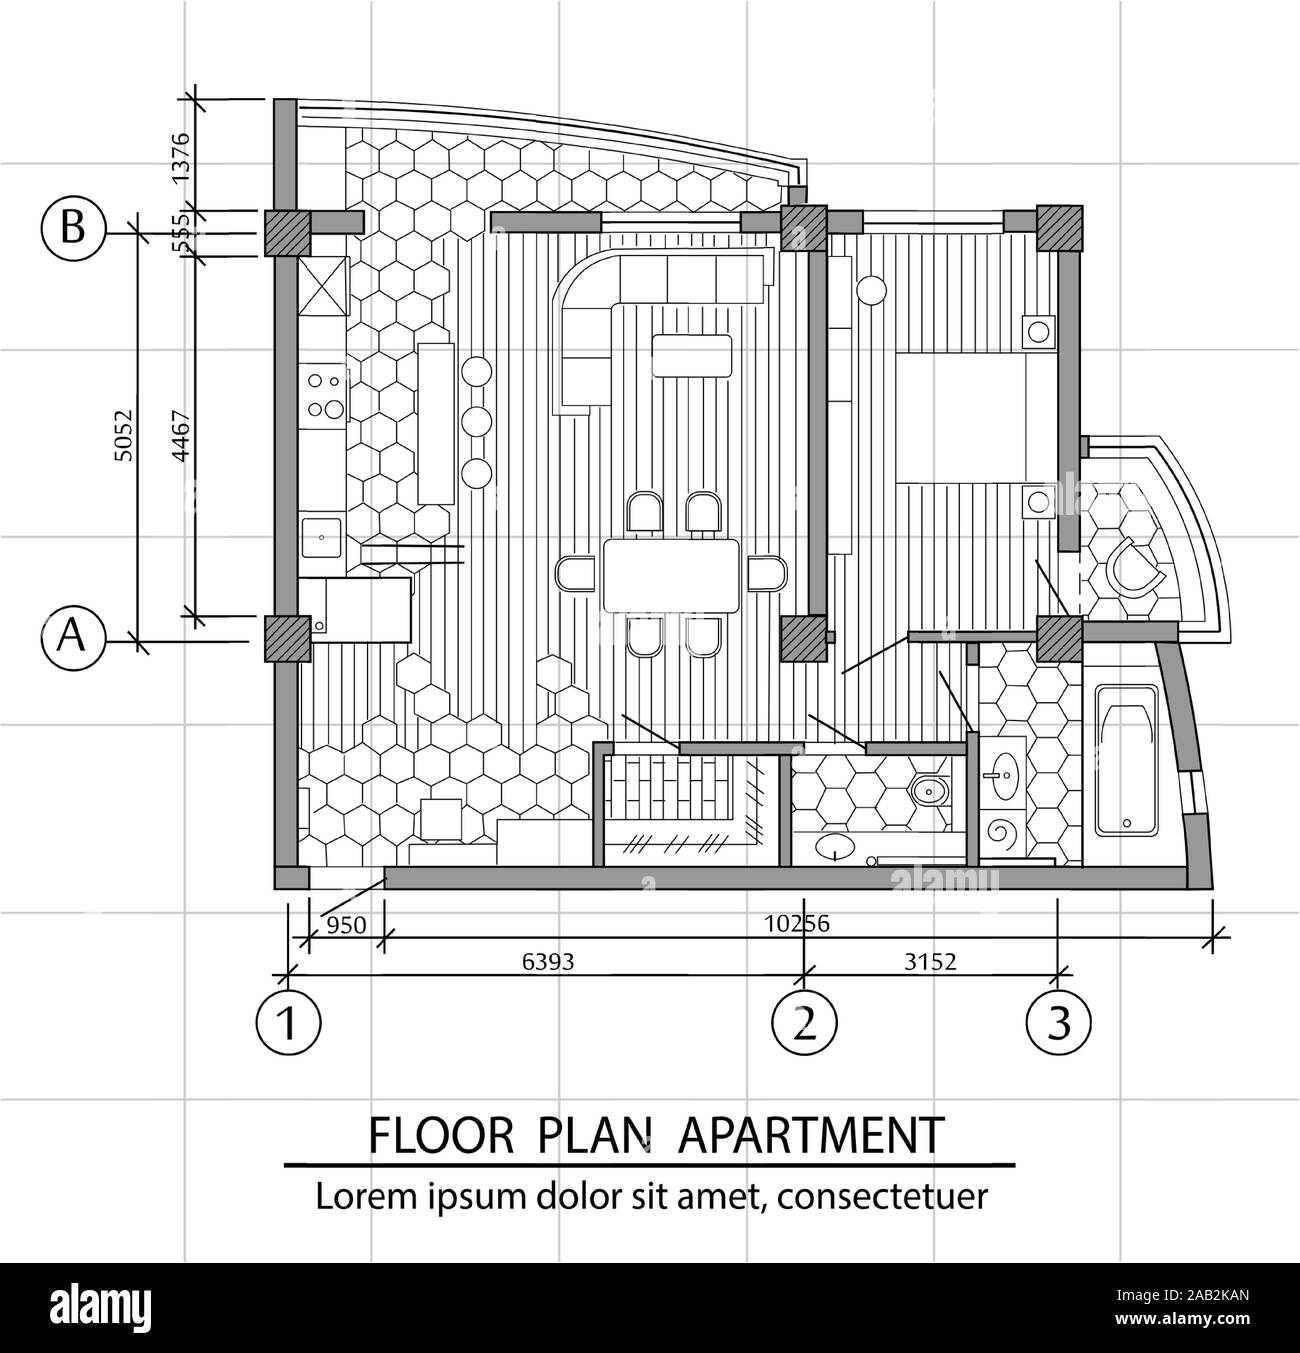 Floor Plan Of A Modern Apartment Interior Design With Kitchen